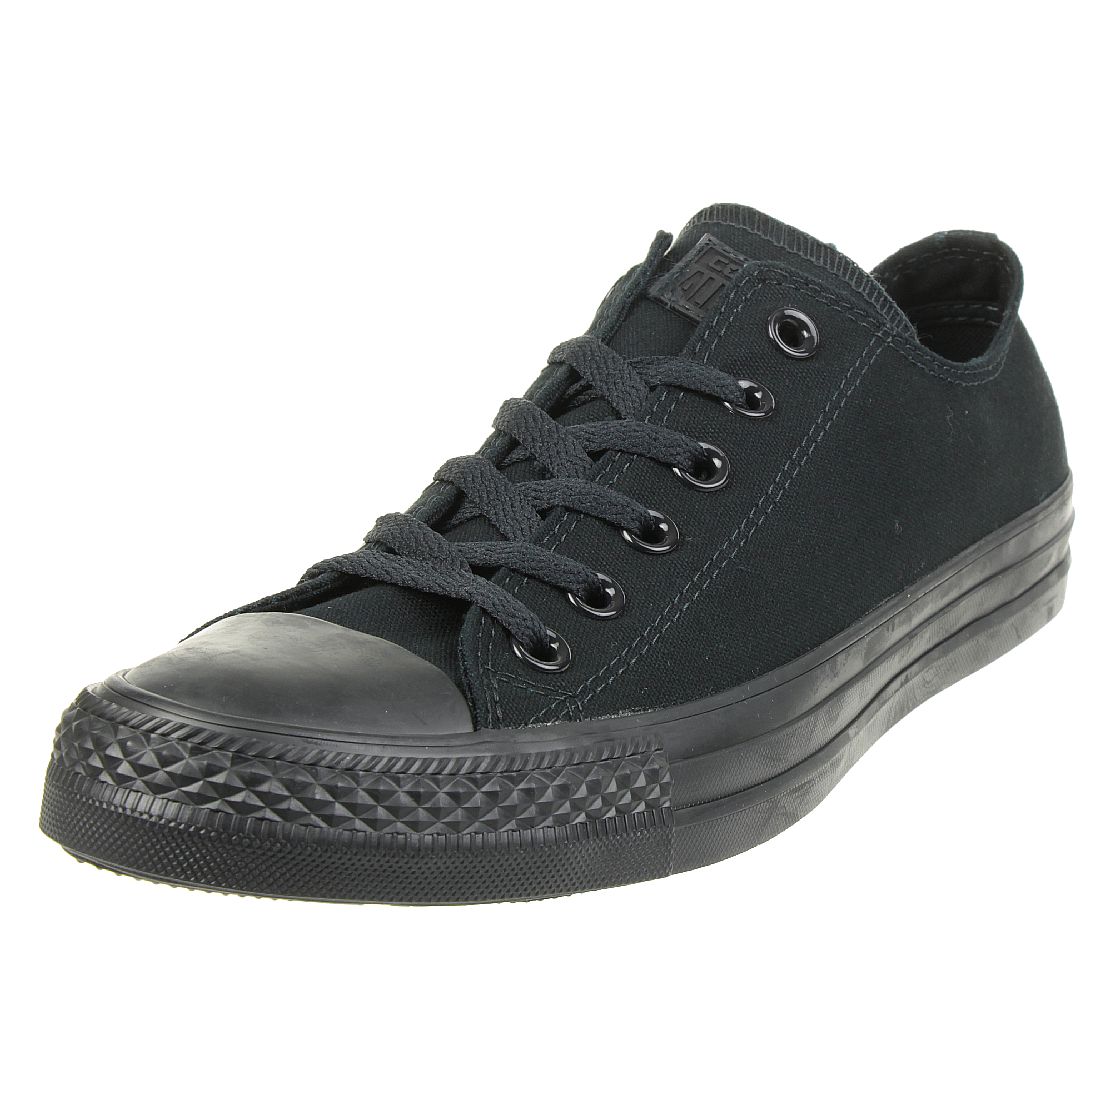 Converse All Star OX Chuck Schuhe Sneaker canvas Black Monochrome M5039C 37.5 EU